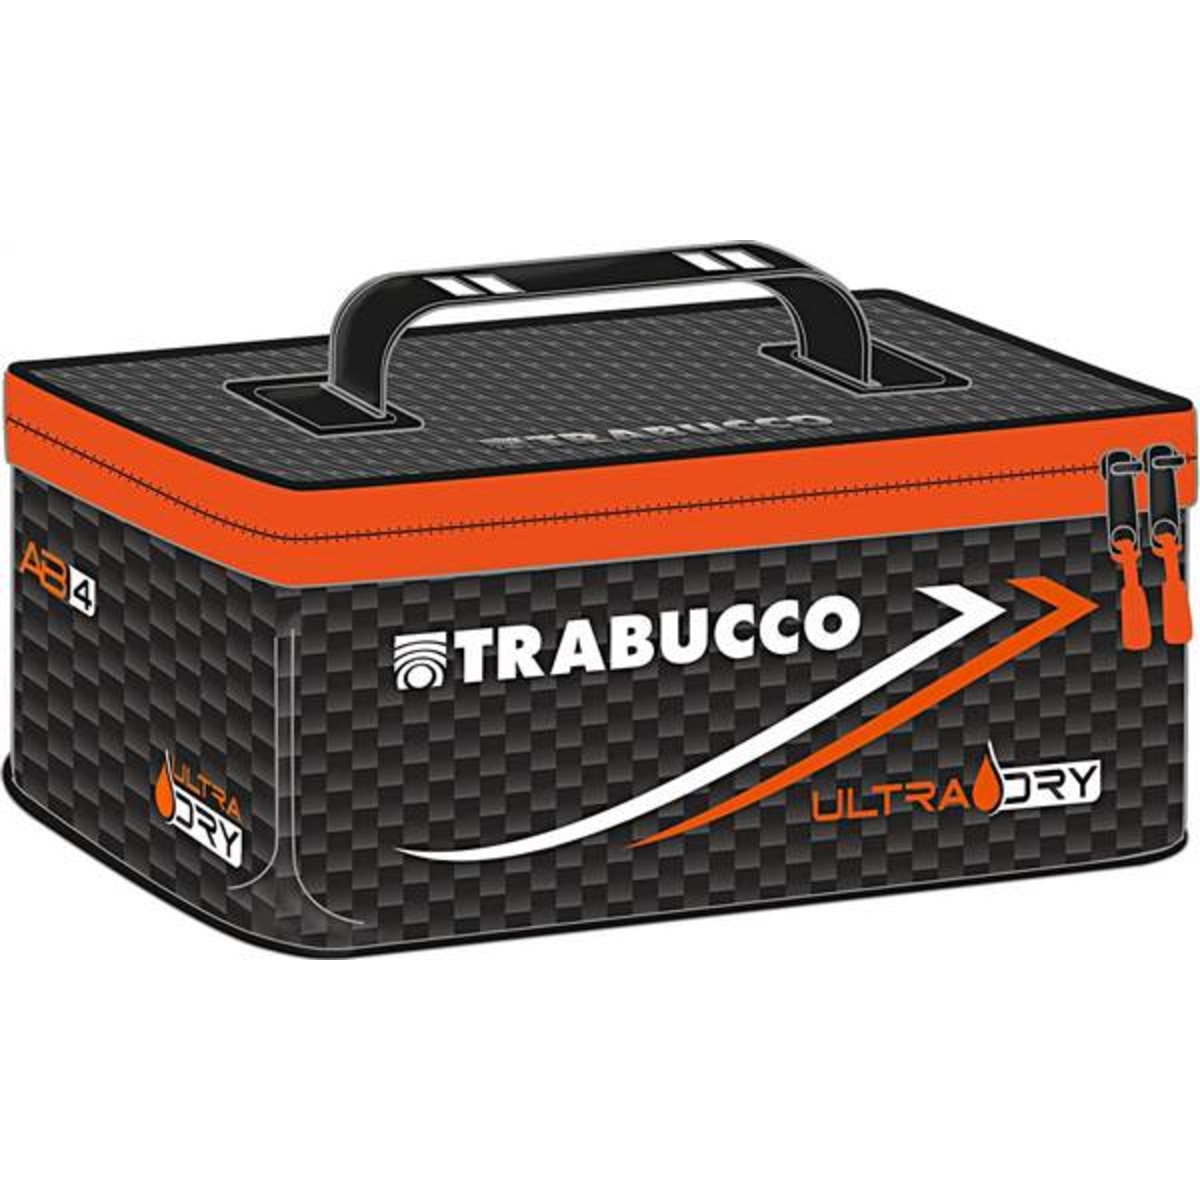 Trabucco Eva Accessories Bags - 24x16x10 cm